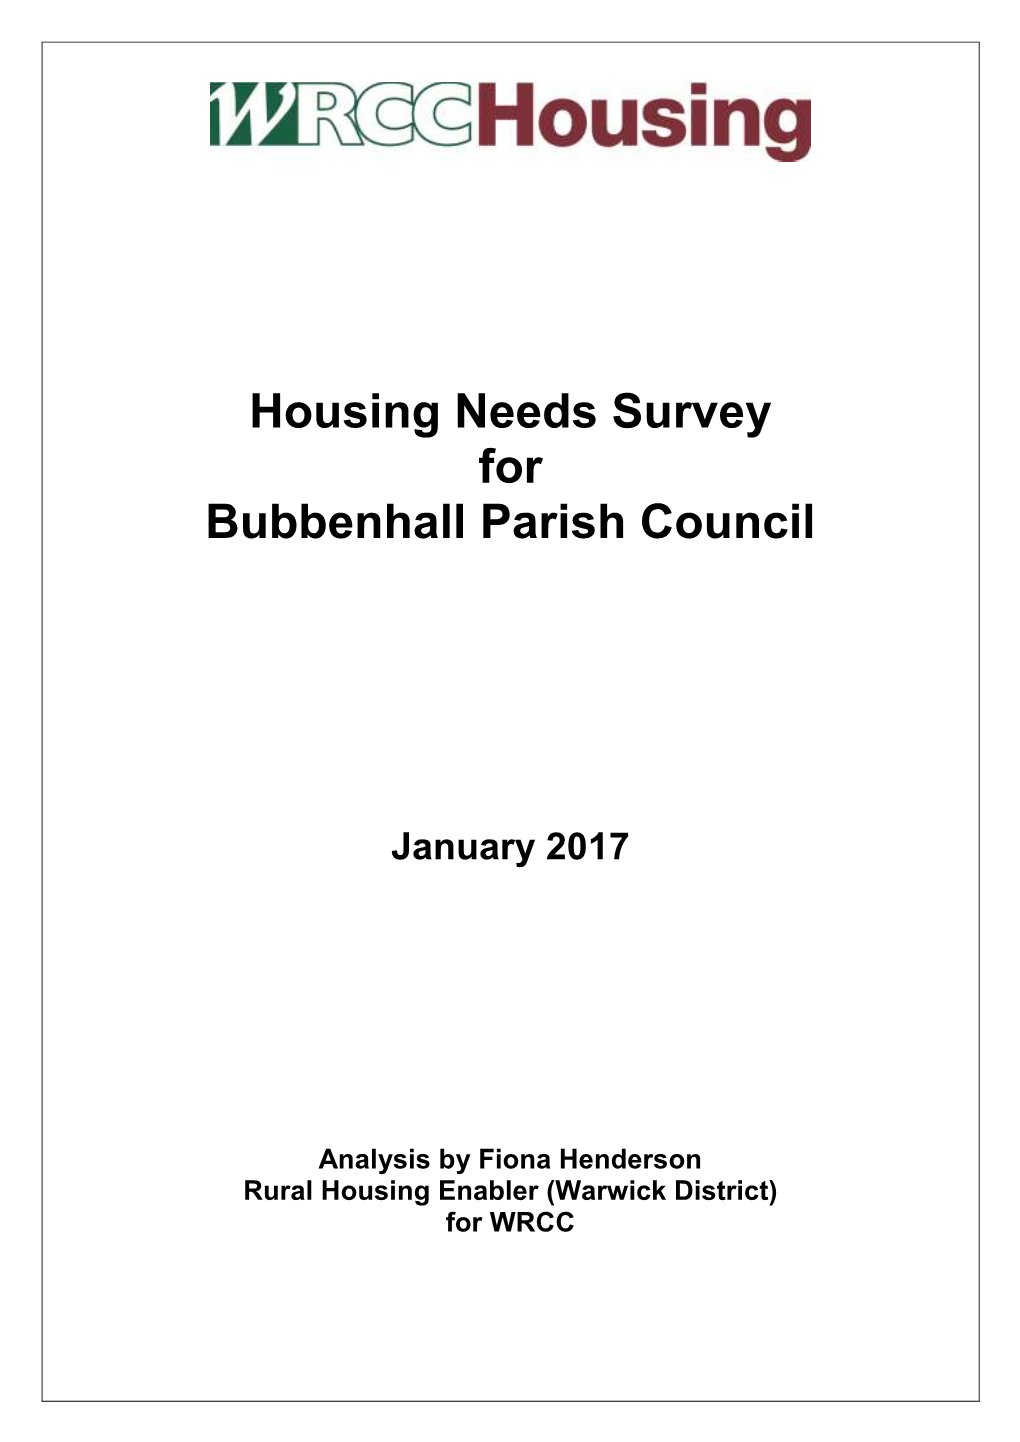 Housing Needs Survey for Bubbenhall Parish Council